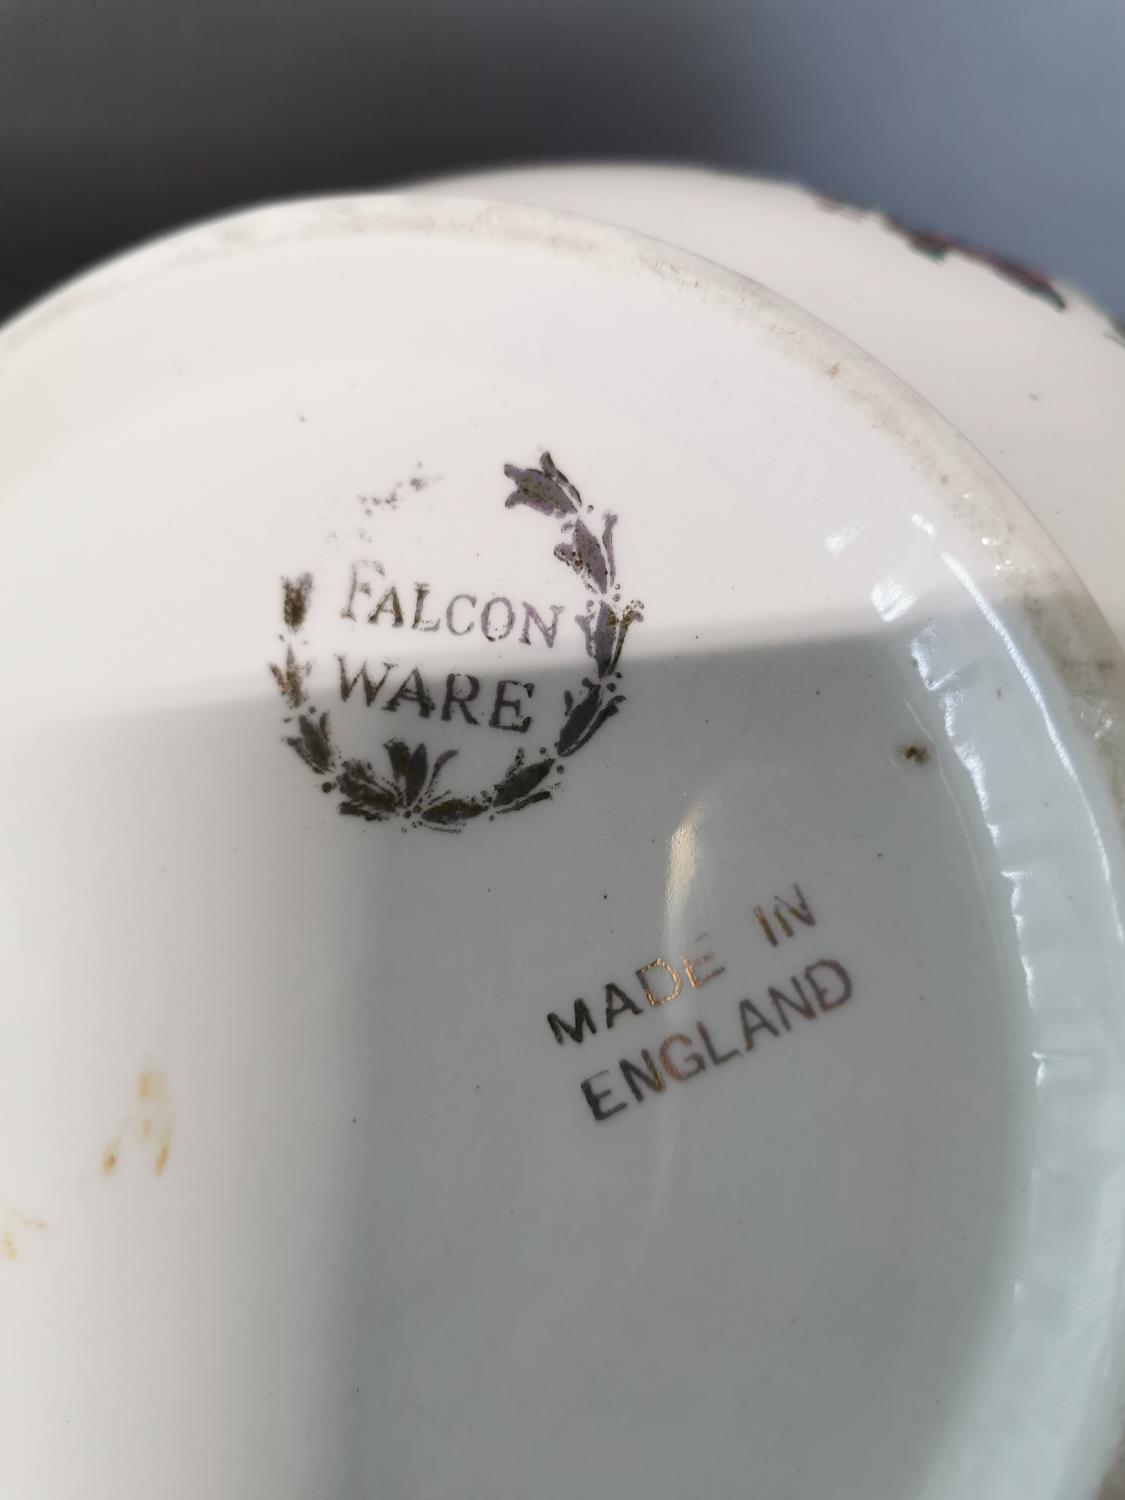 Five piece ceramic Falcon Ware jug and basin set - Image 4 of 4